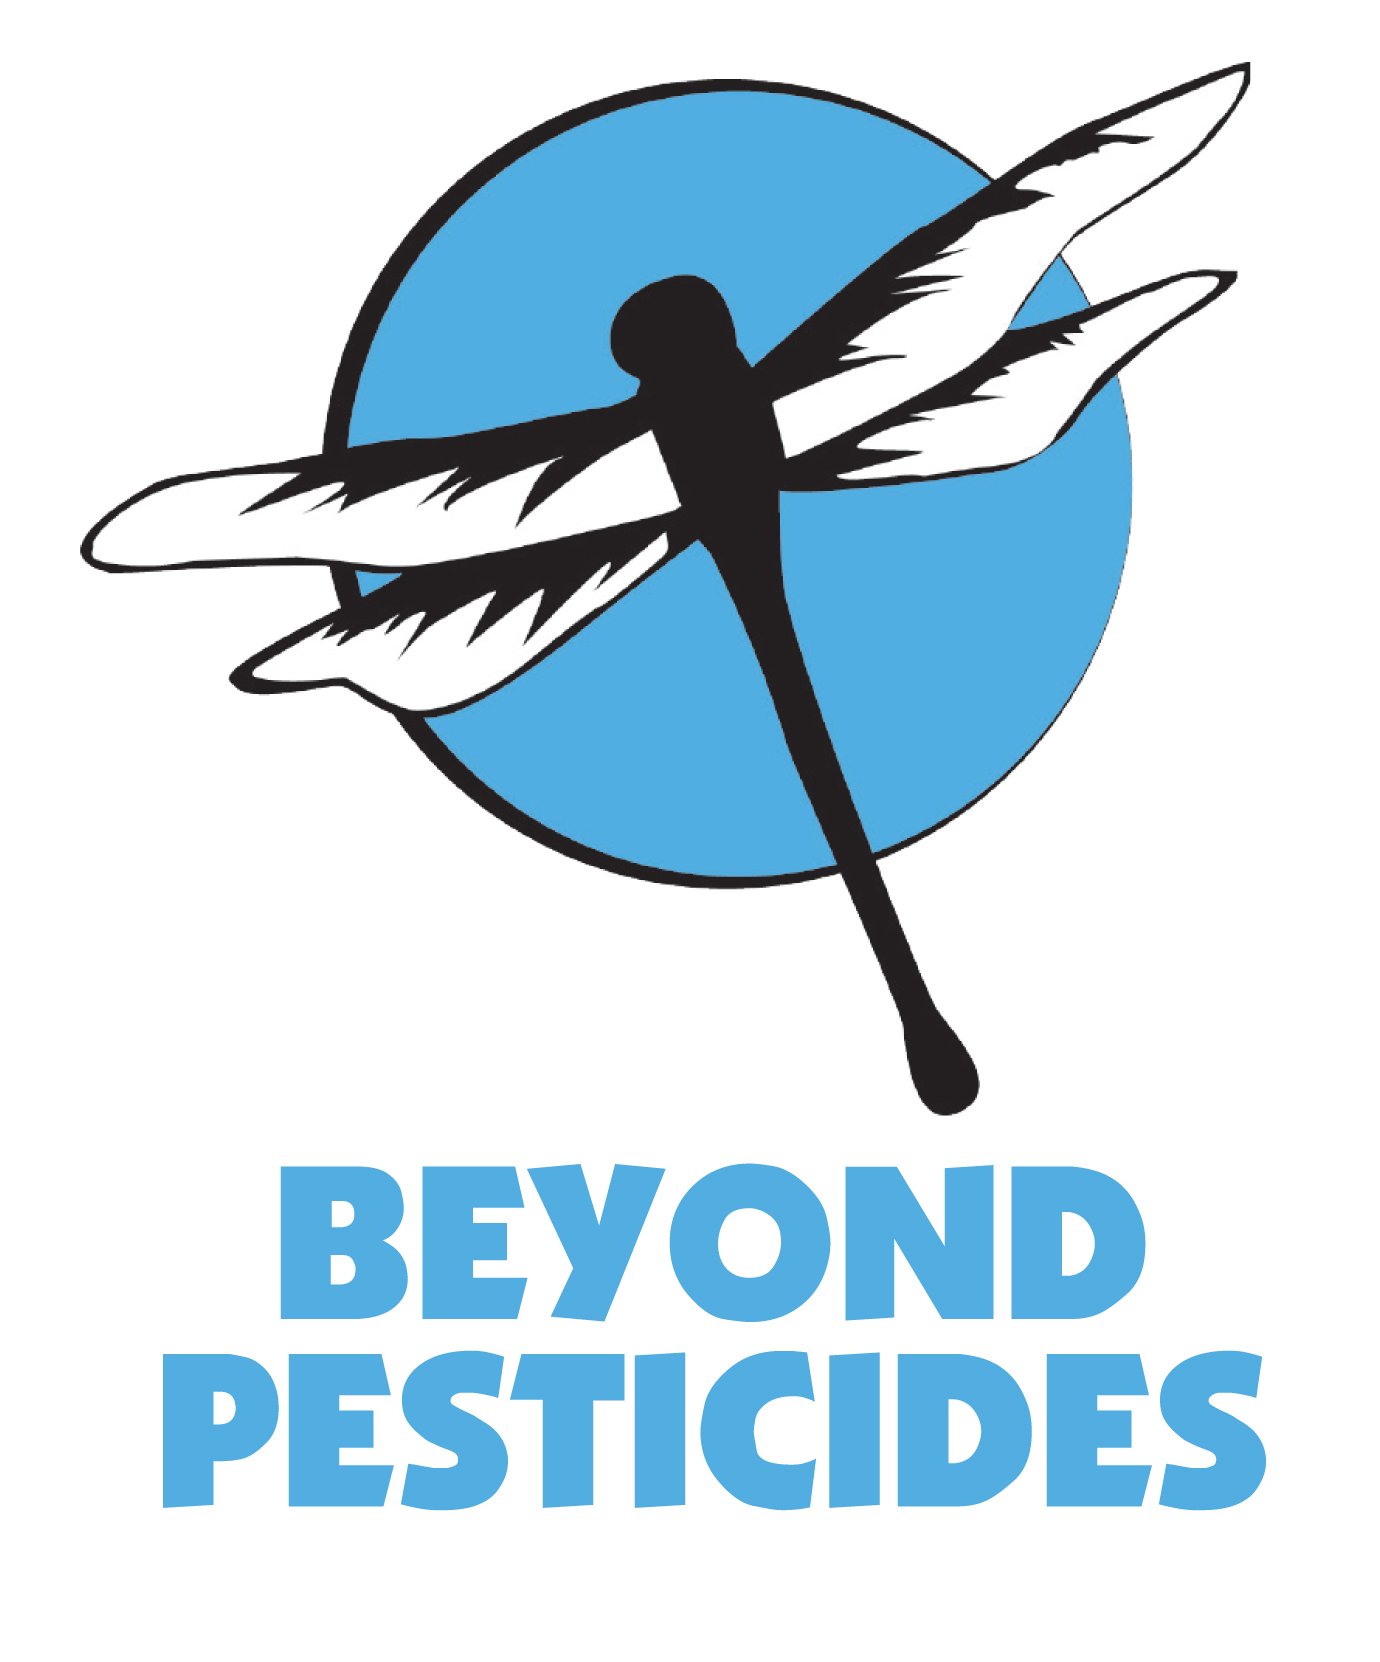 Beyond Pesticides